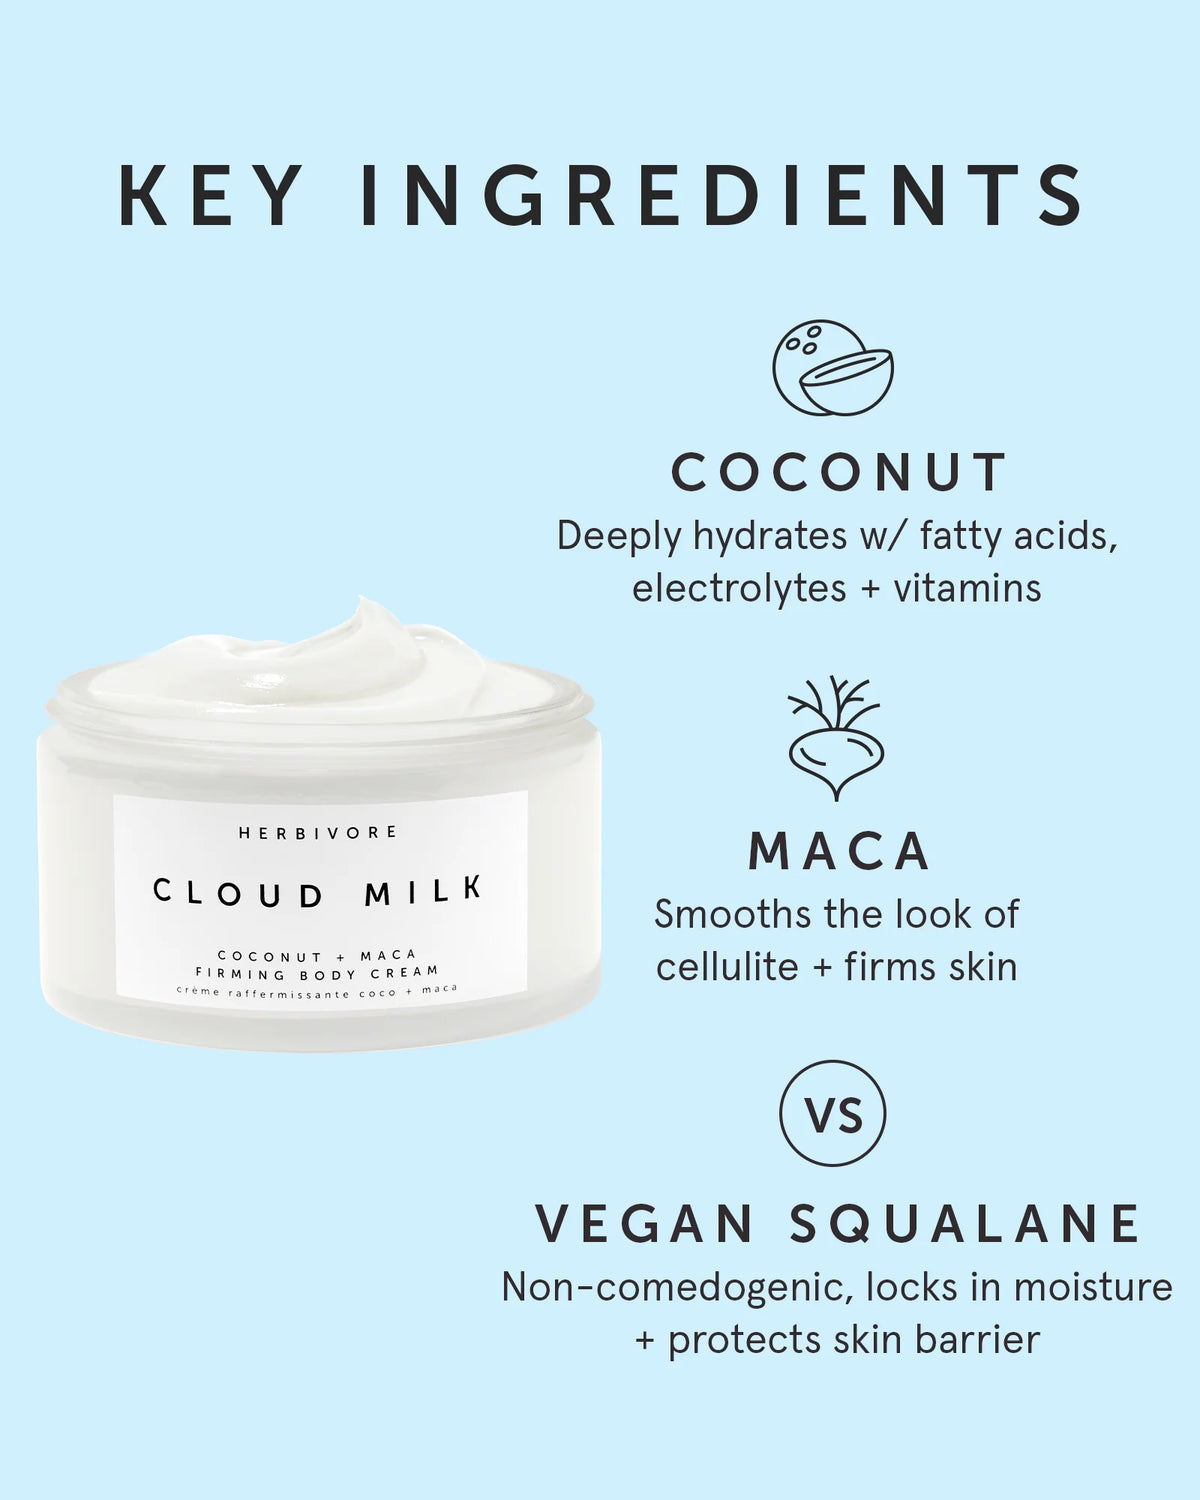 Cloud Milk Coconut + Maca Firming Body Cream